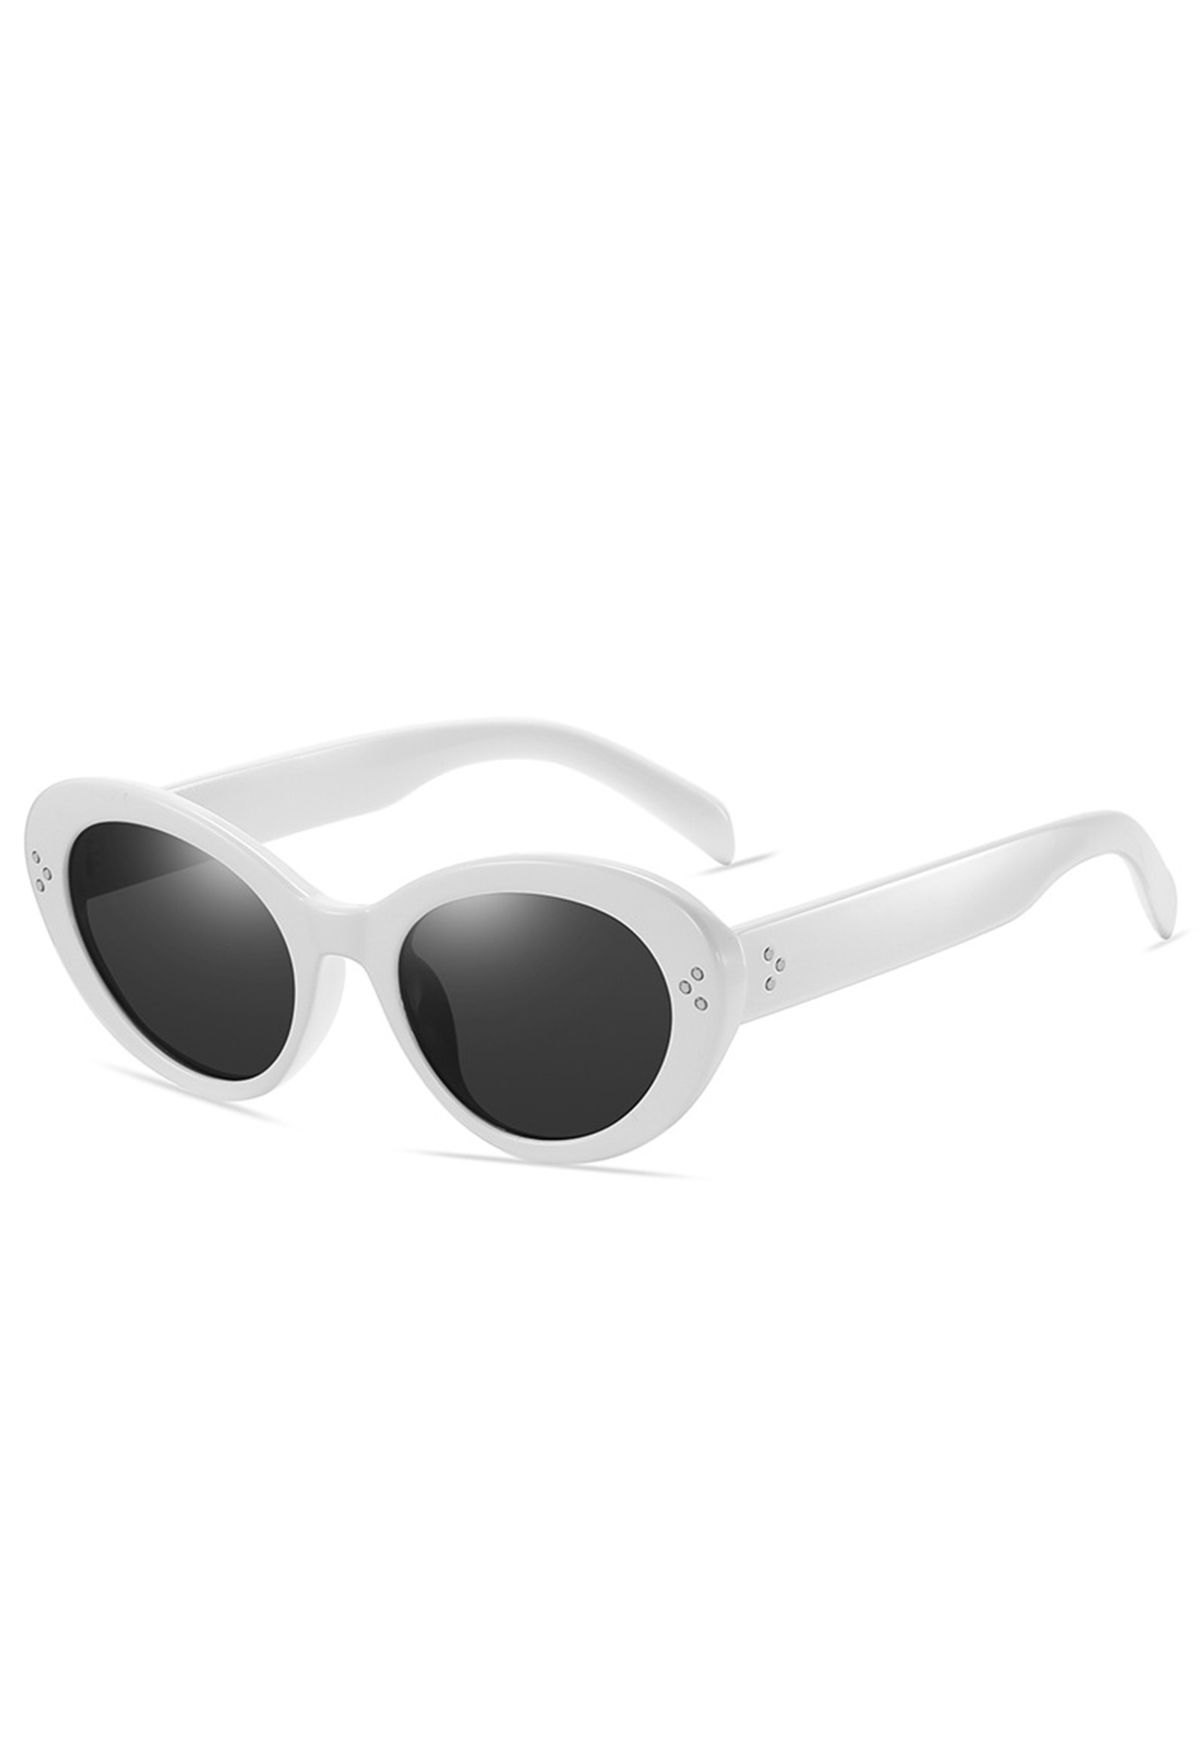 Gafas de sol estilo ojo de gato retro con montura completa en blanco